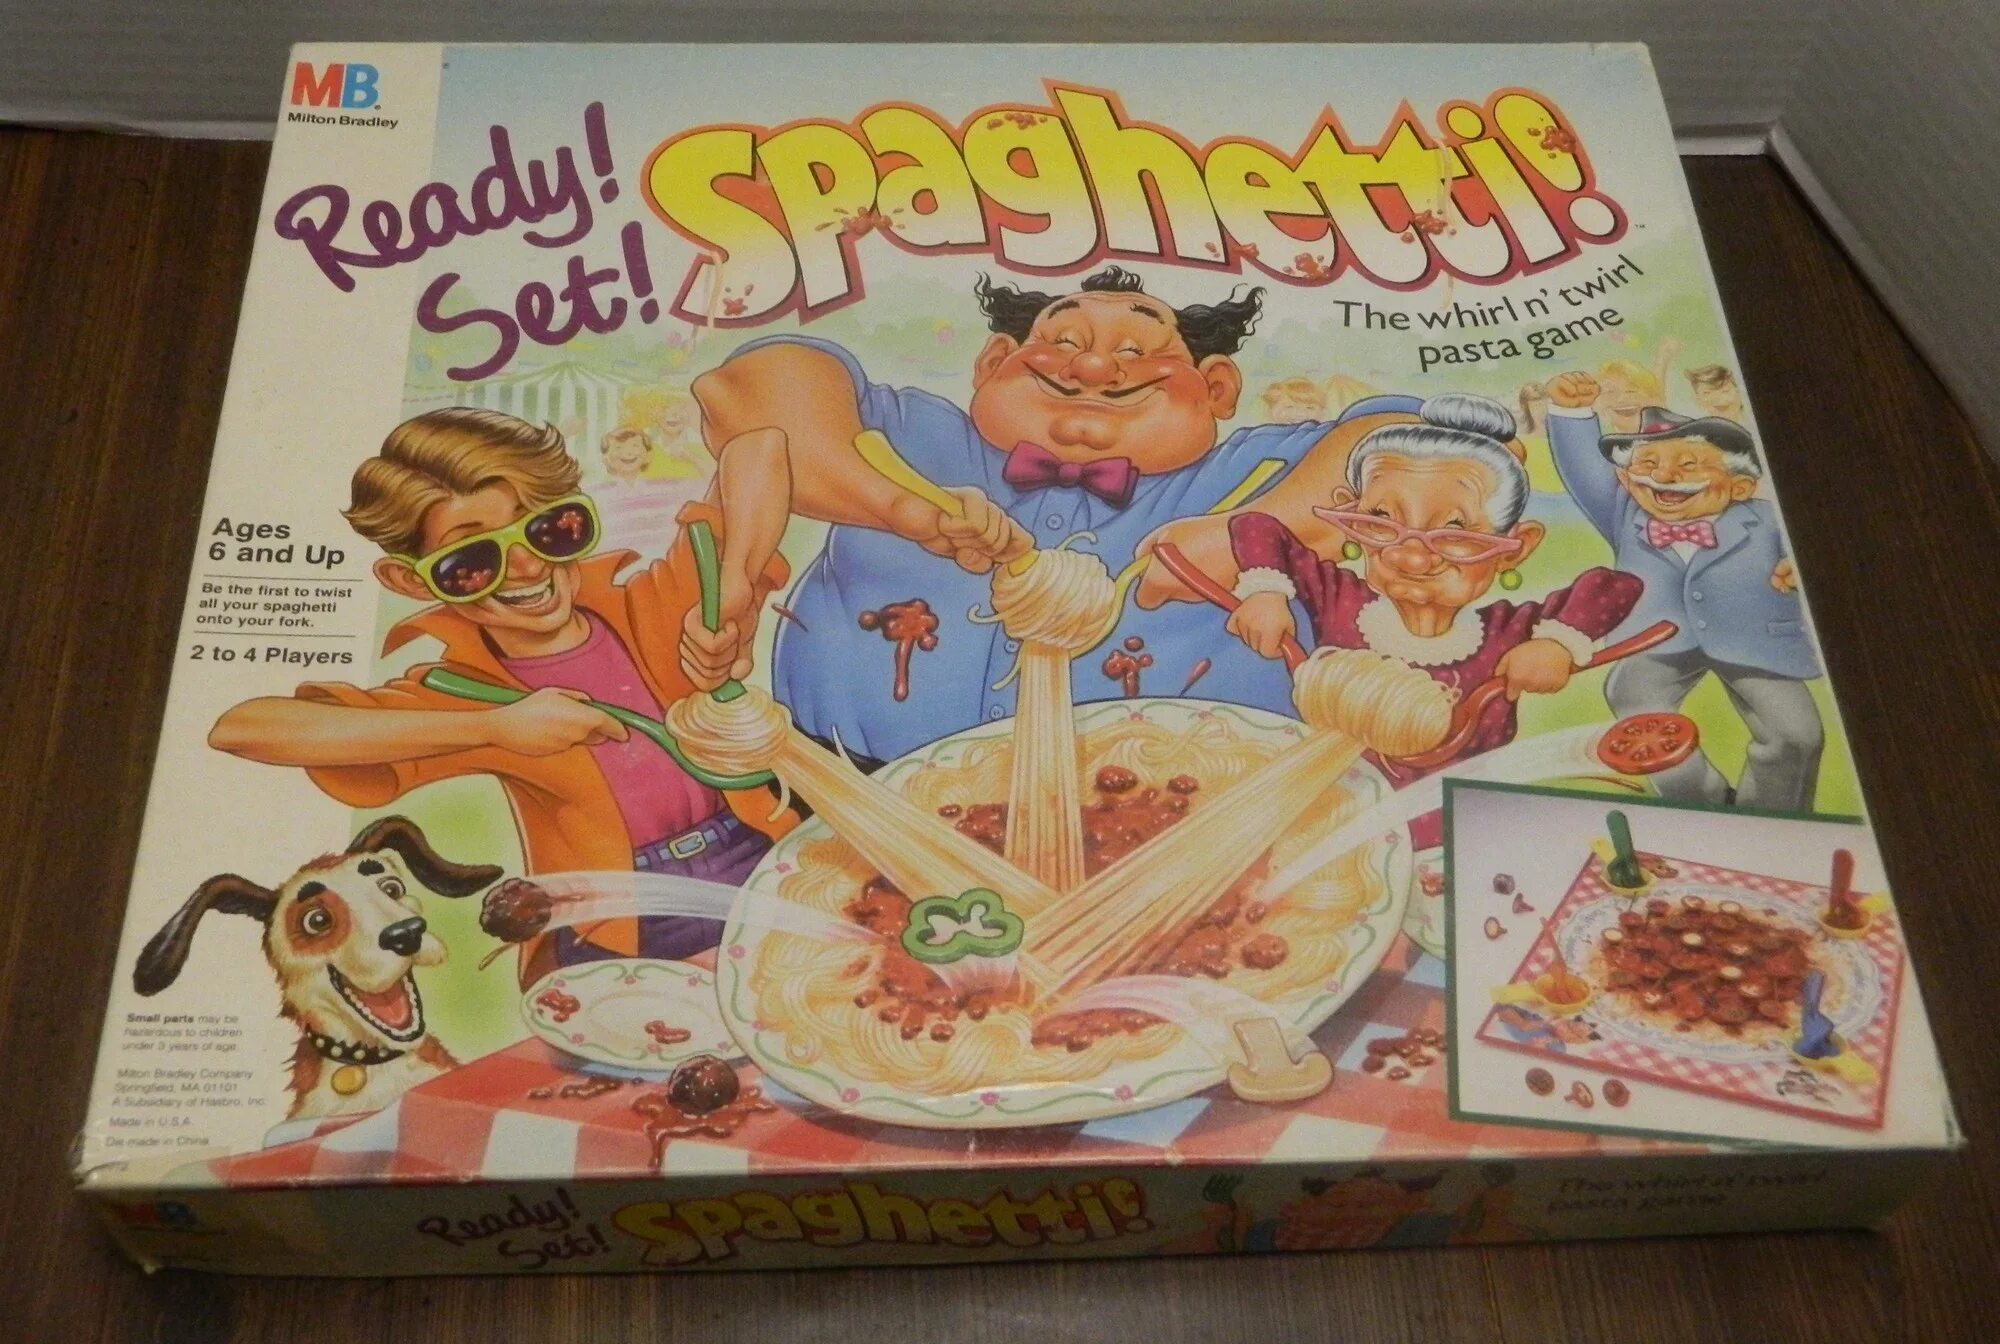 Игра ready Spaghetti. Ready Spaghetti настольная игра. Настольная игра шустрые спагетти. Настольная игра "спагетти". Играй спагетти